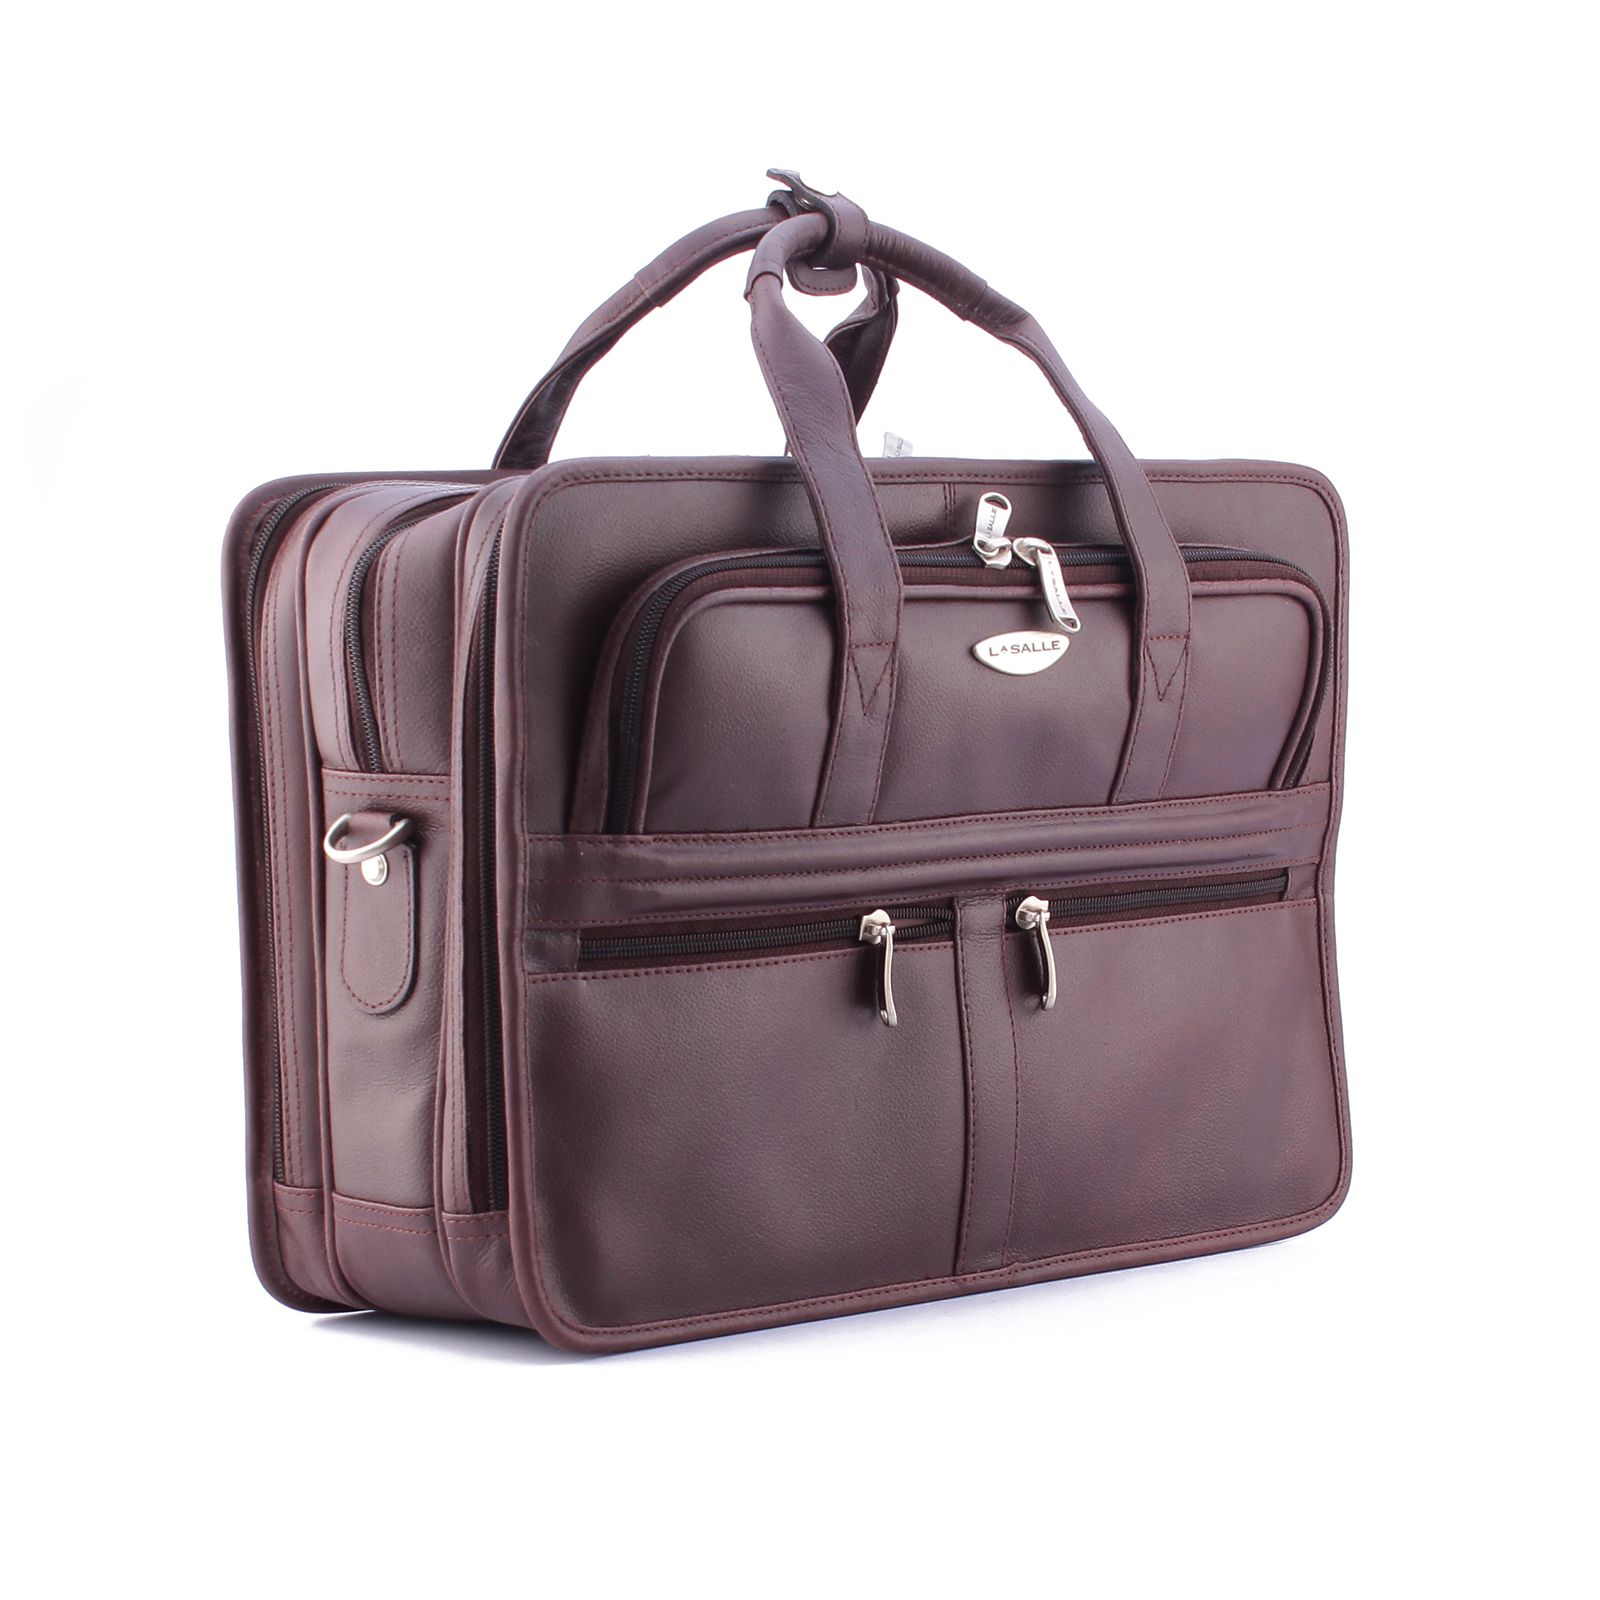 LASALLE Brown Laptop Bags - Buy LASALLE Brown Laptop Bags Online at Low ...